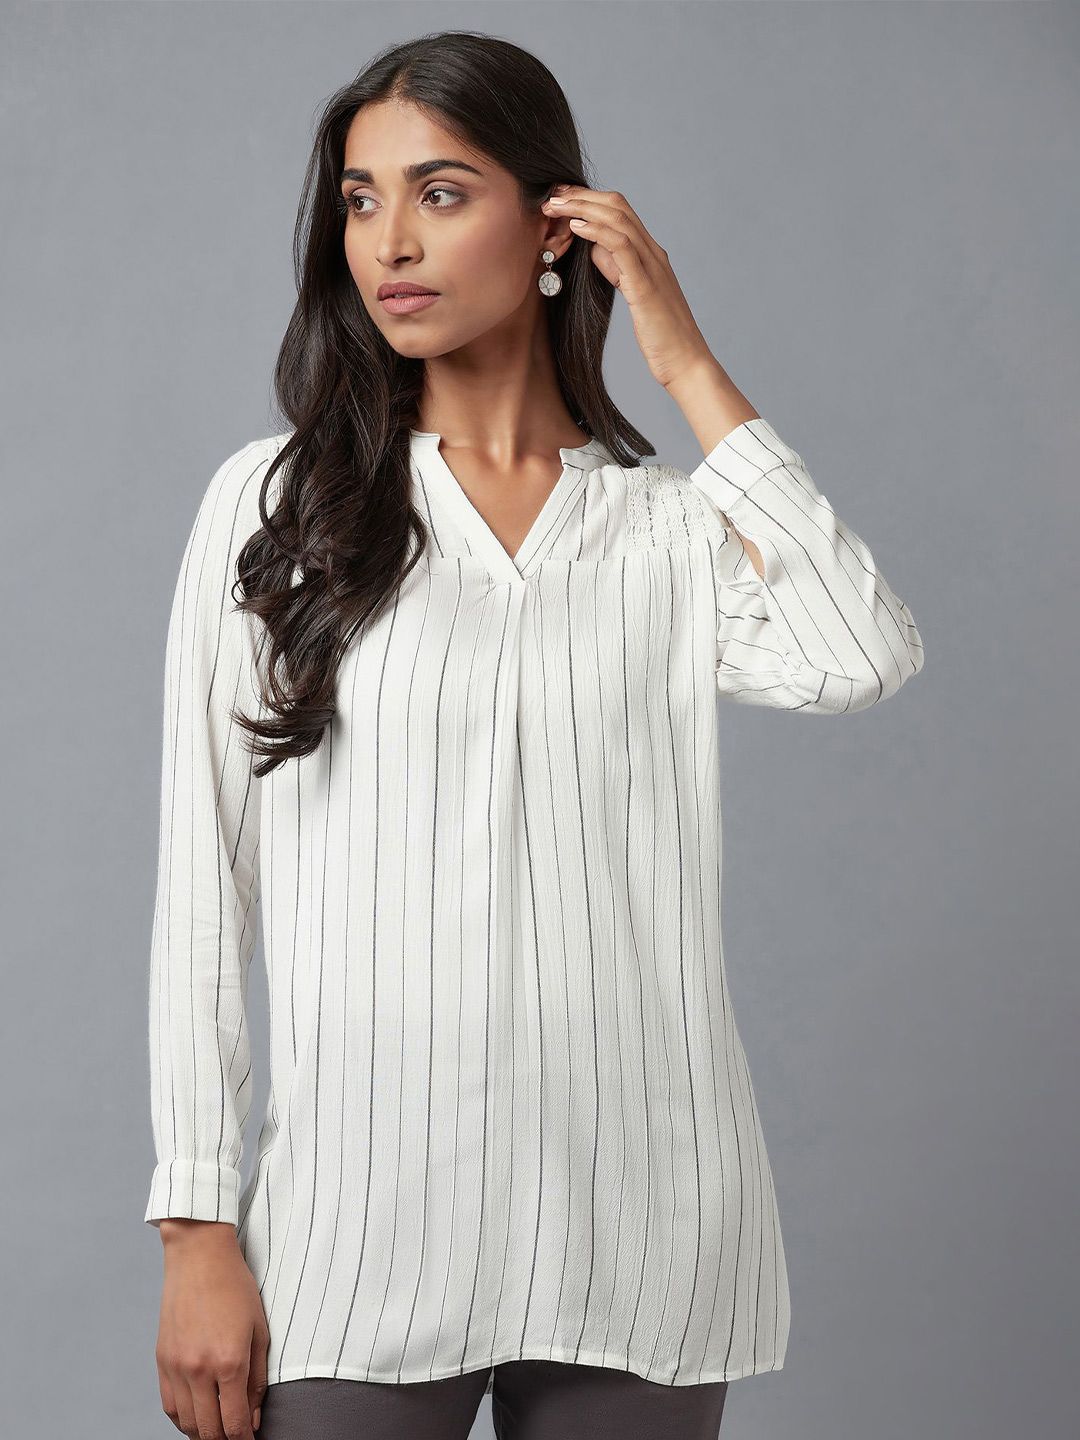 W Women White Striped Mandarin Collar Top Price in India